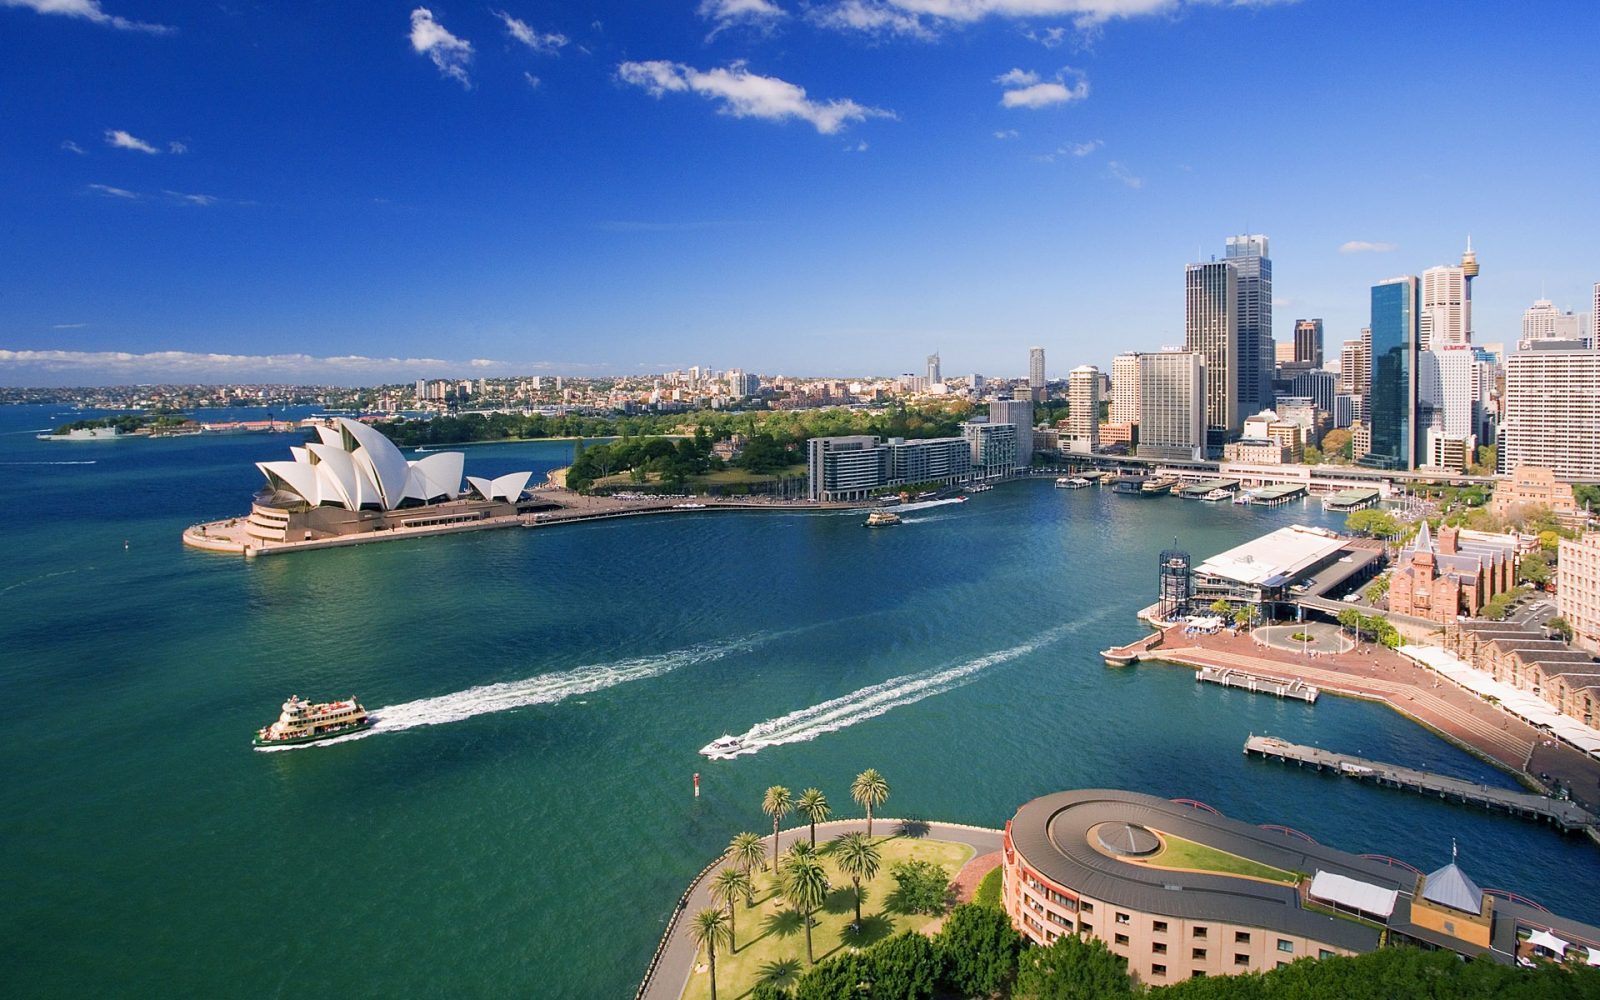 Trip to Australia cost: Sydney, Australia